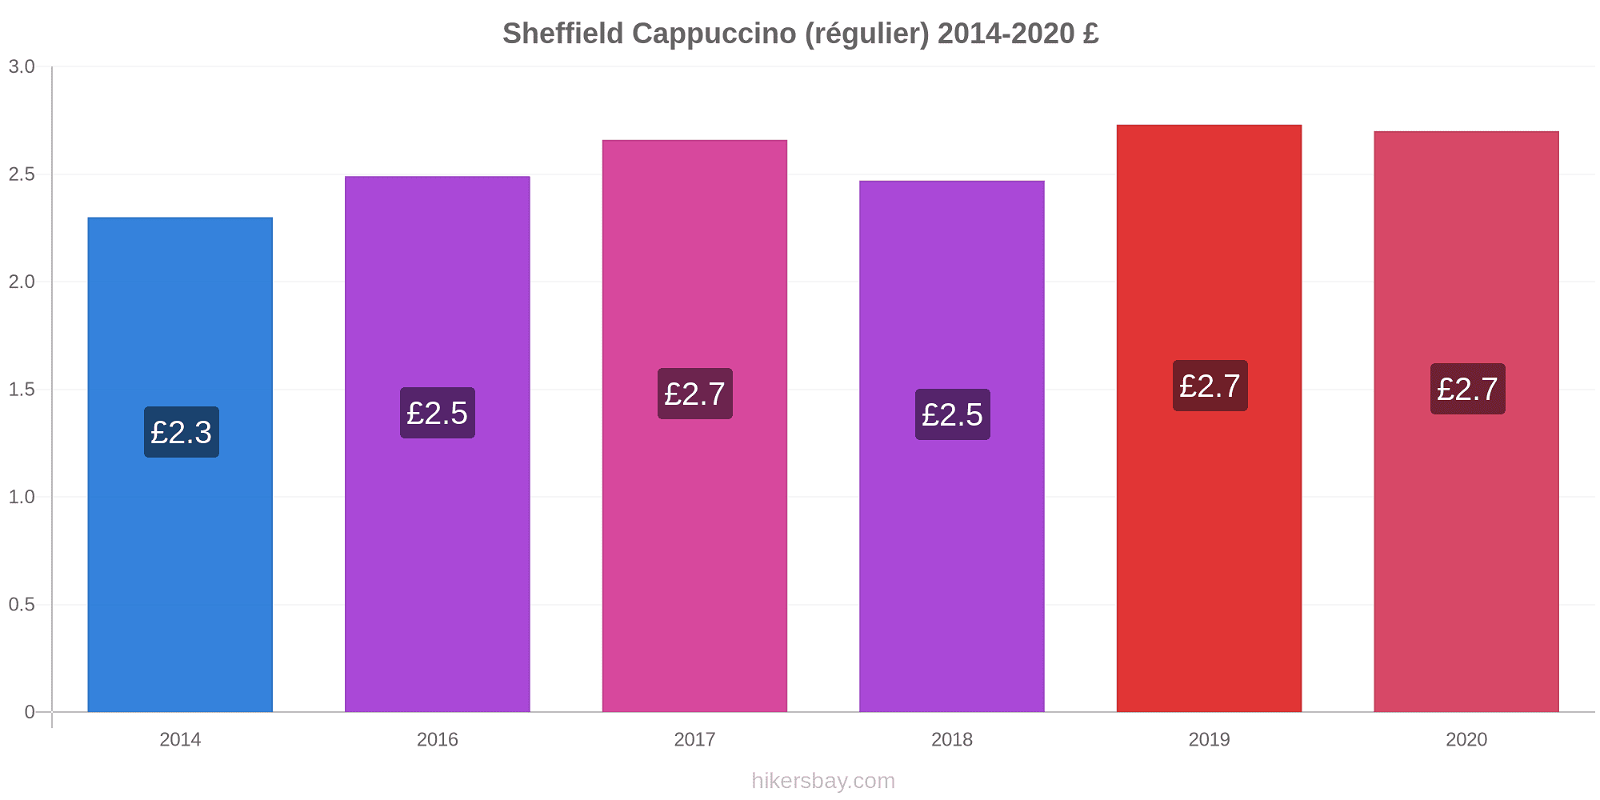 Sheffield changements de prix Cappuccino (régulier) hikersbay.com